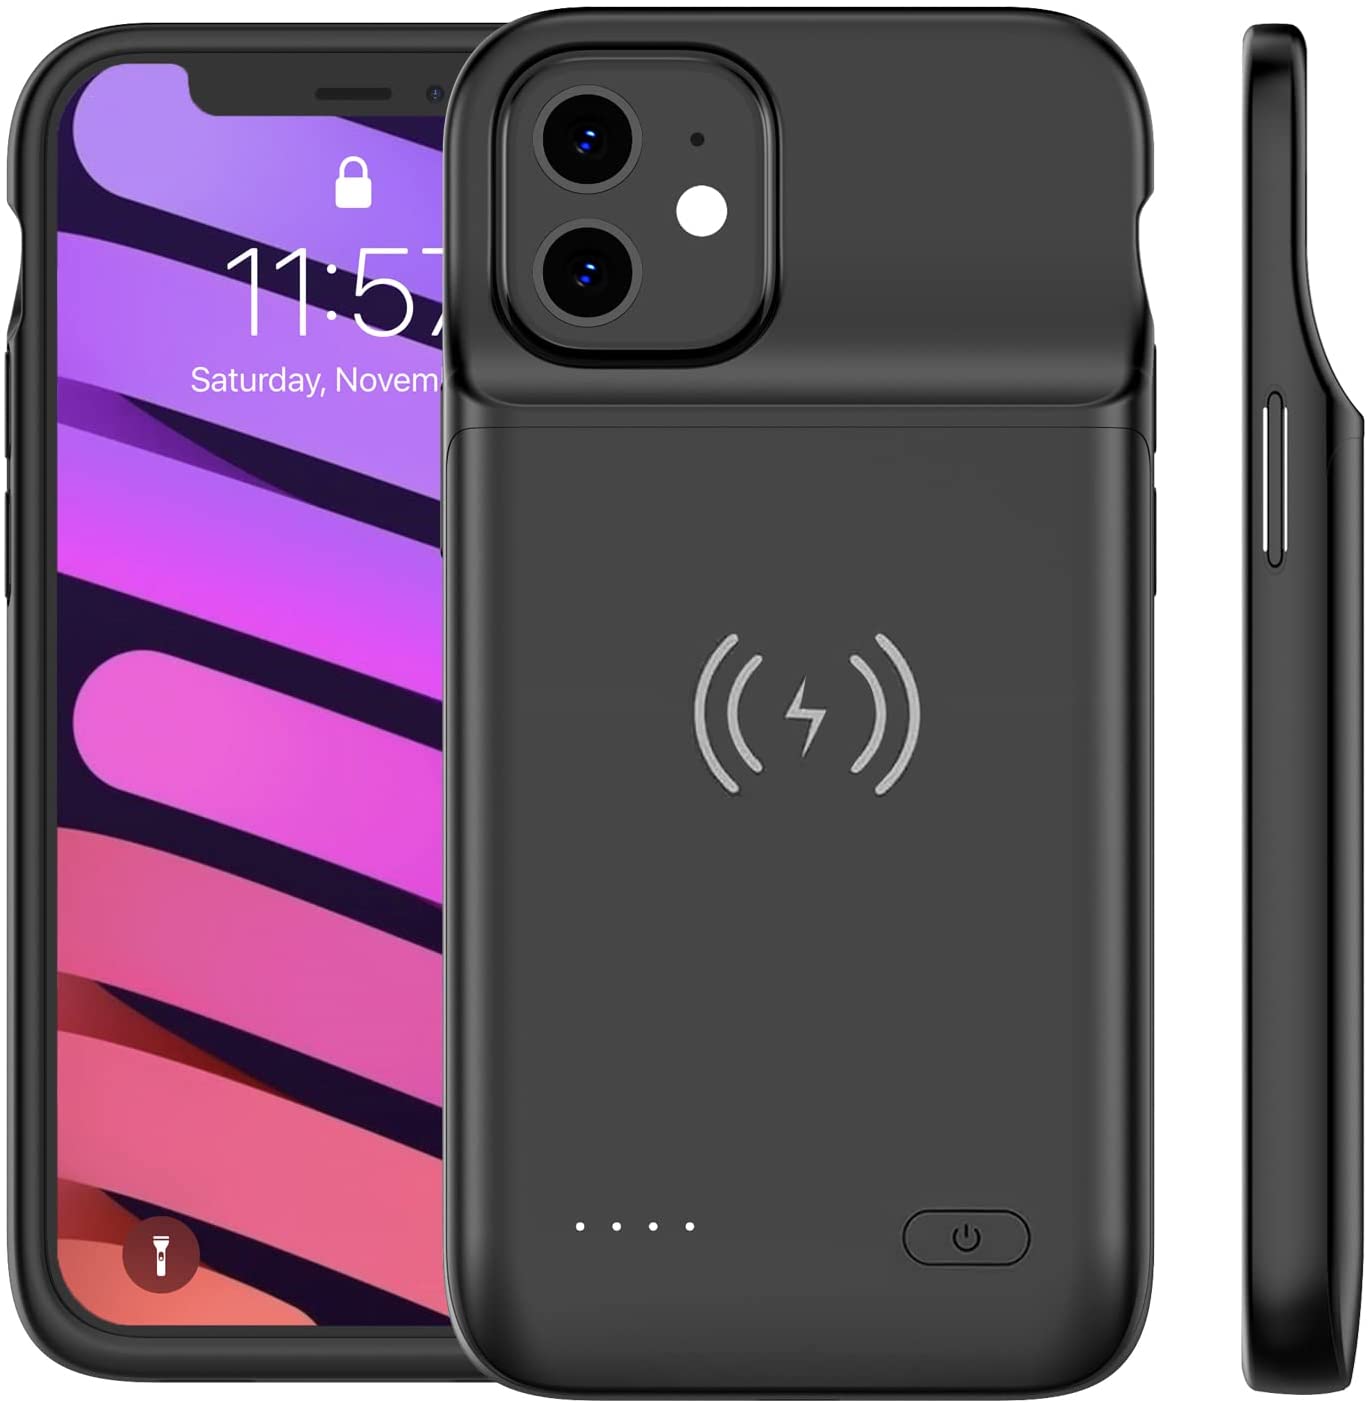 Funda de bateria para iPhone 12/12 Pro (6.1 pulgadas) 8000 mAh, funda de cargador portatil ultrafina compatible con iPhone 12/iPhone 12 Pro (ZHX-640) color negro